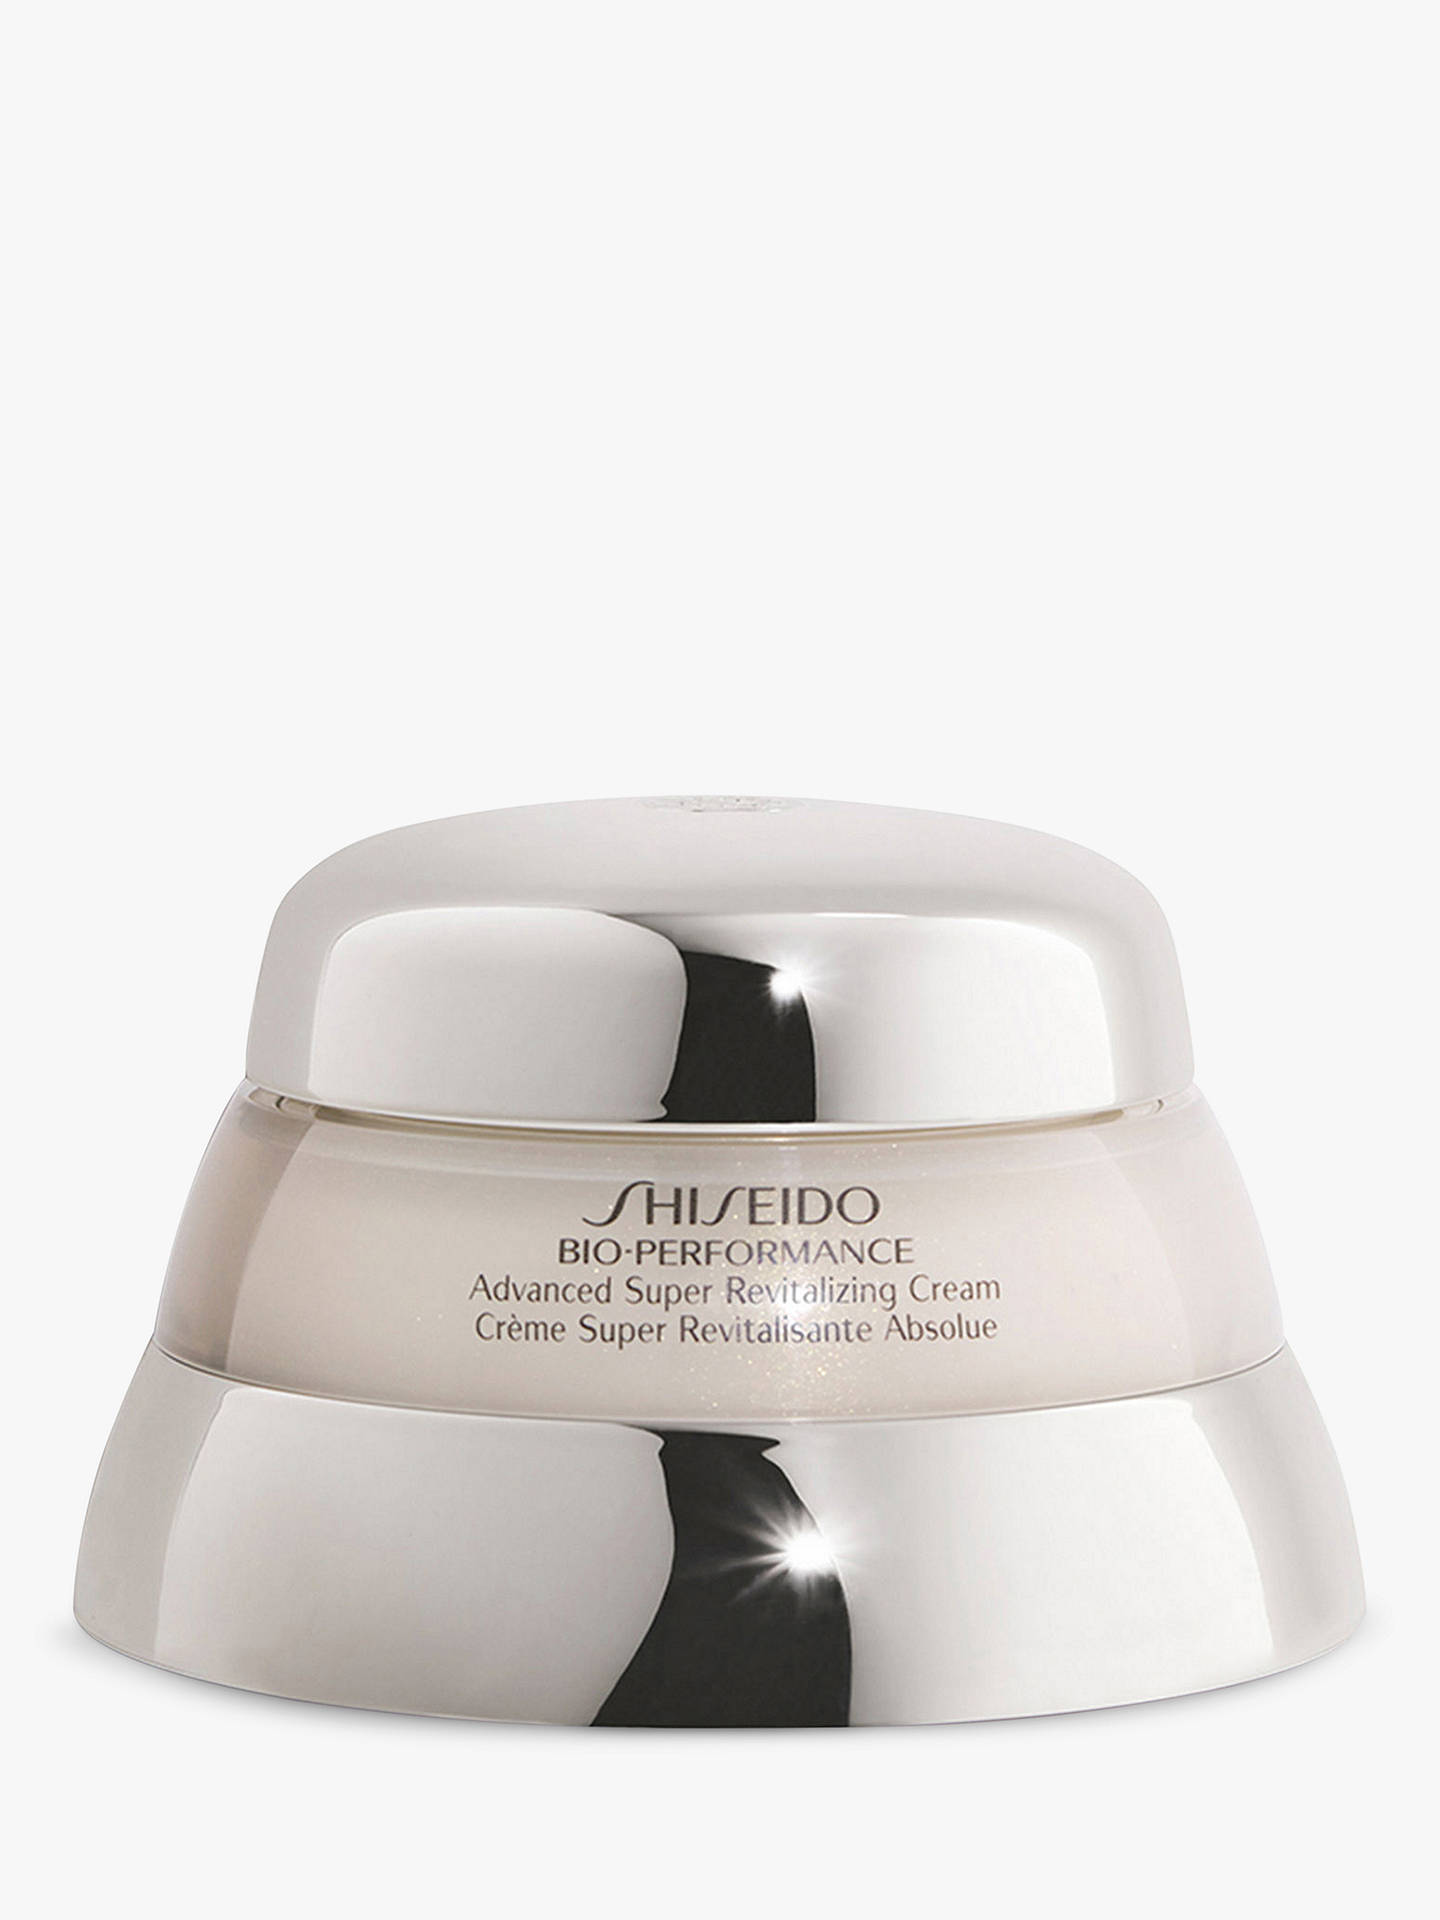 Shiseido Bio-Performance Advanced Super Revitalizing Cream, 50ml at